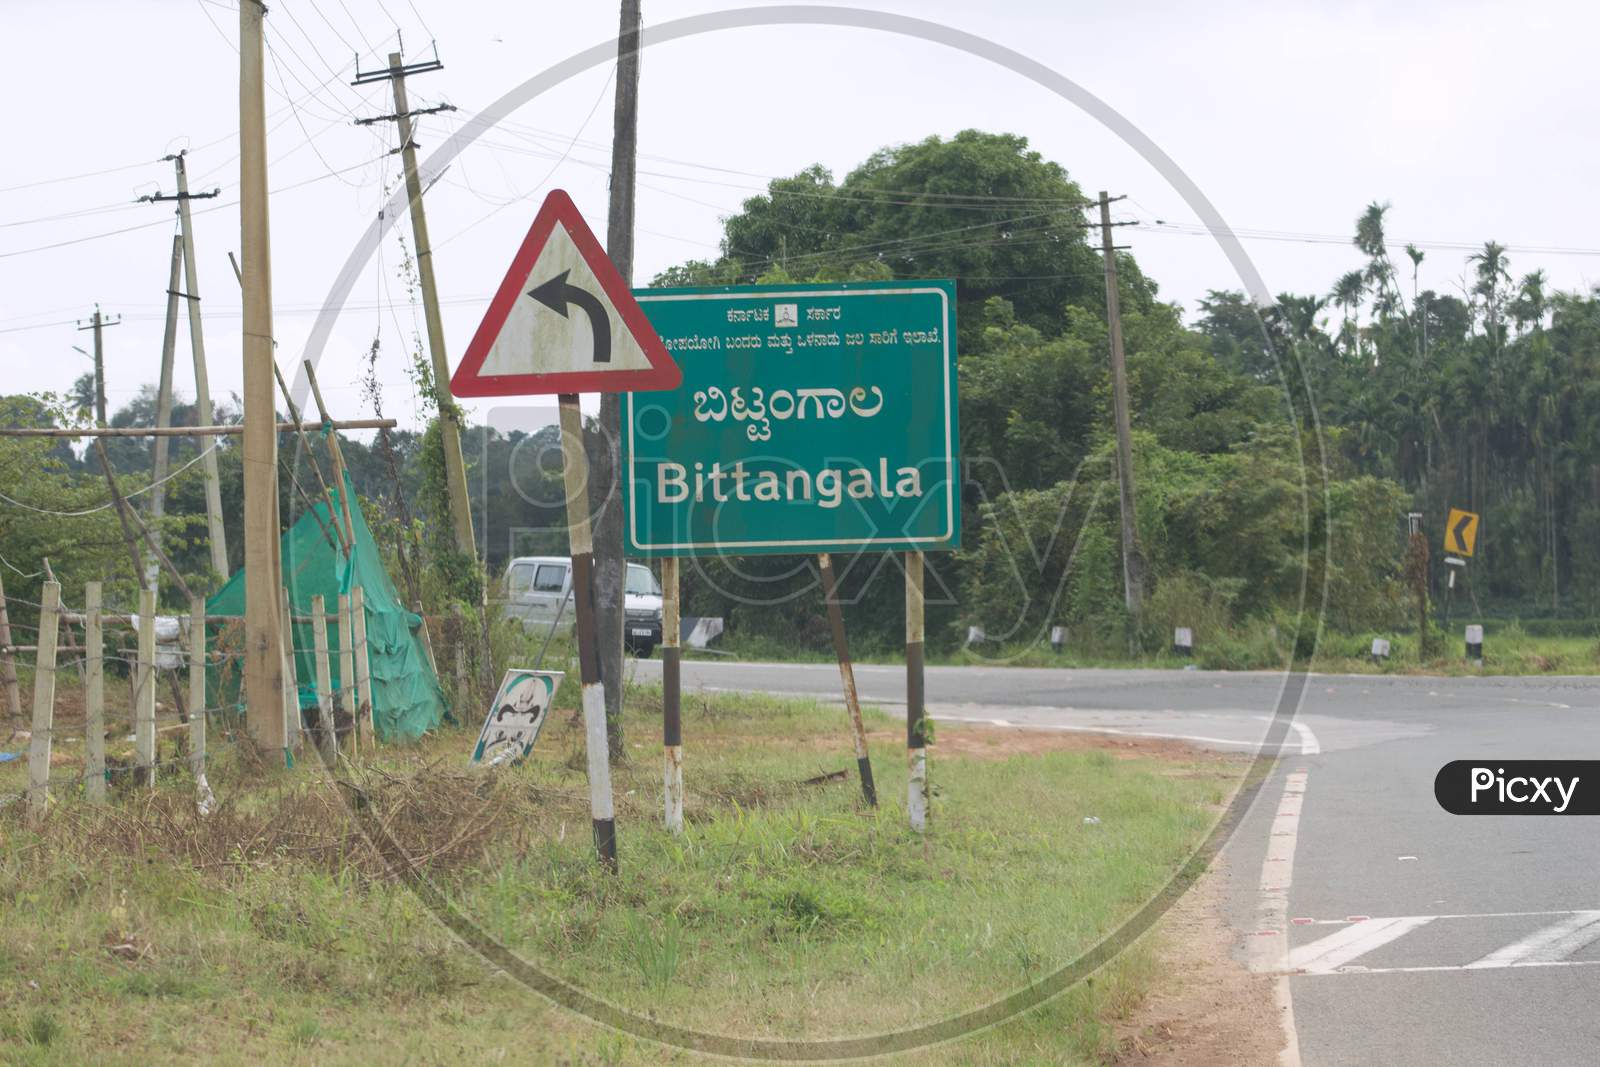 Bittangala town